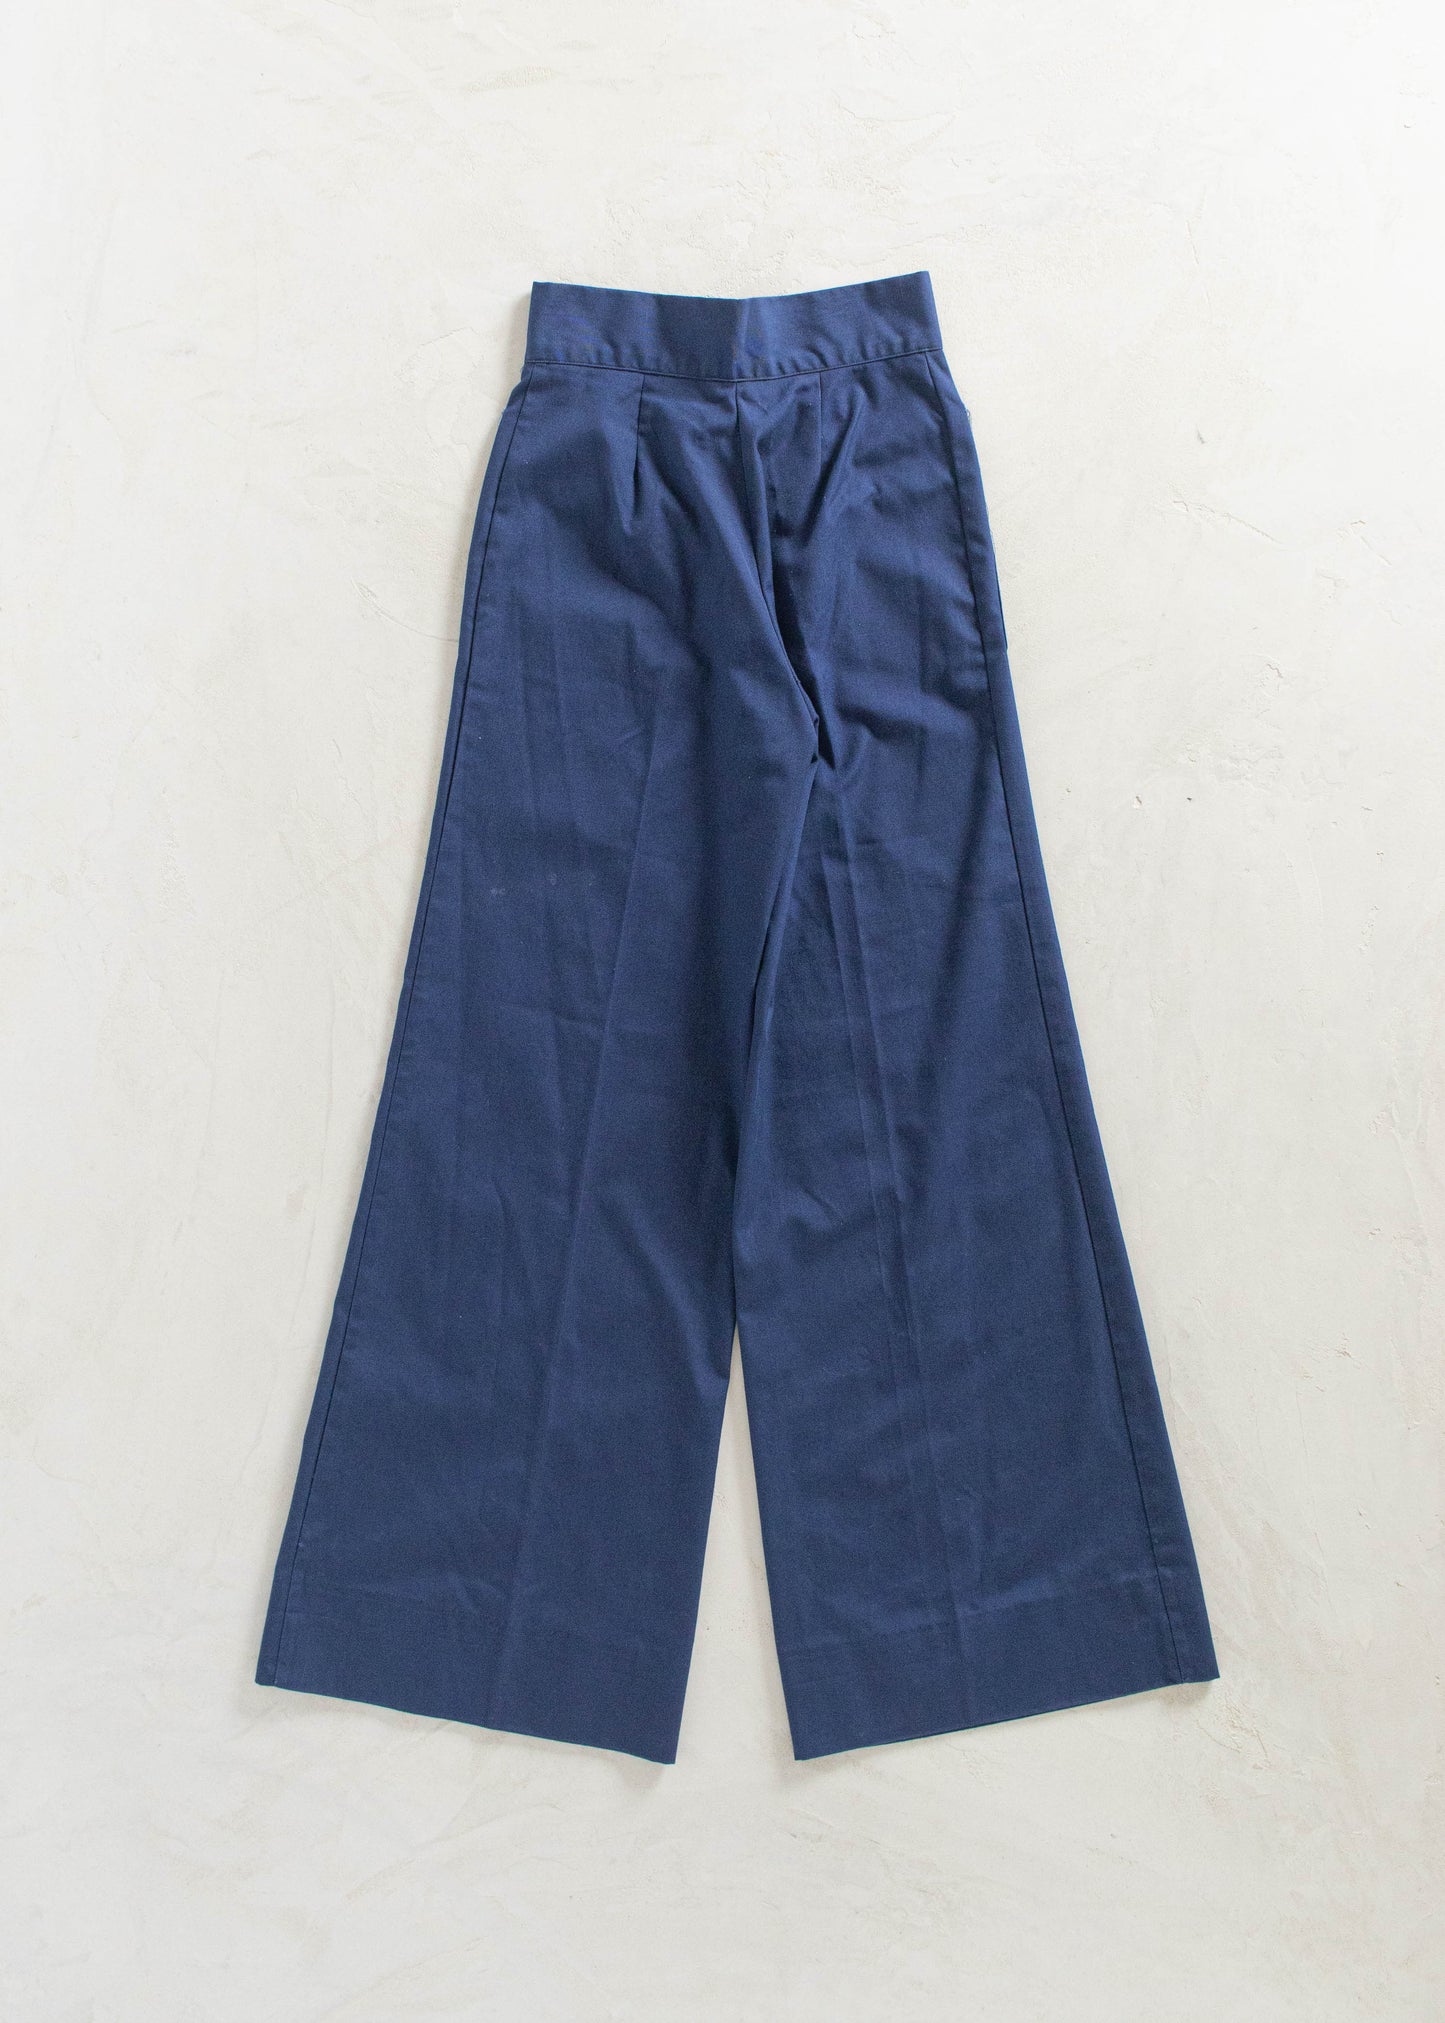 Vintage 1970s Bell Bottom Pants Size Women's 25 Men's 28